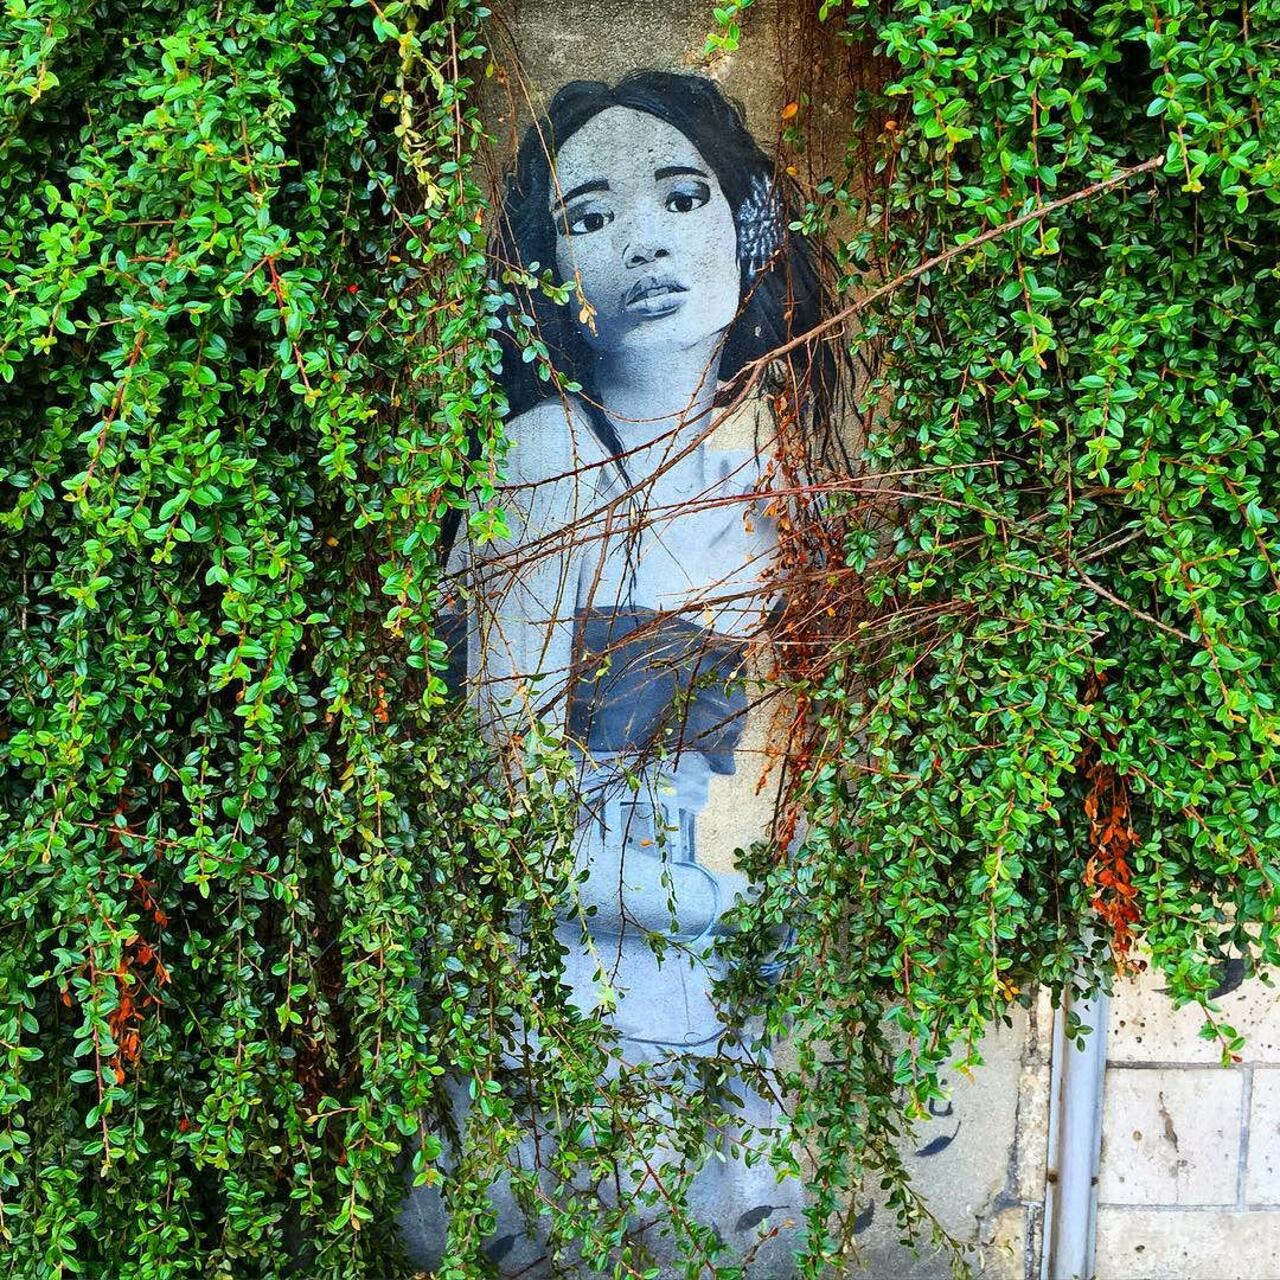 #Paris #graffiti photo by @jeanlucr http://ift.tt/1QQOPlN #StreetArt http://t.co/AxlrdgJMnP